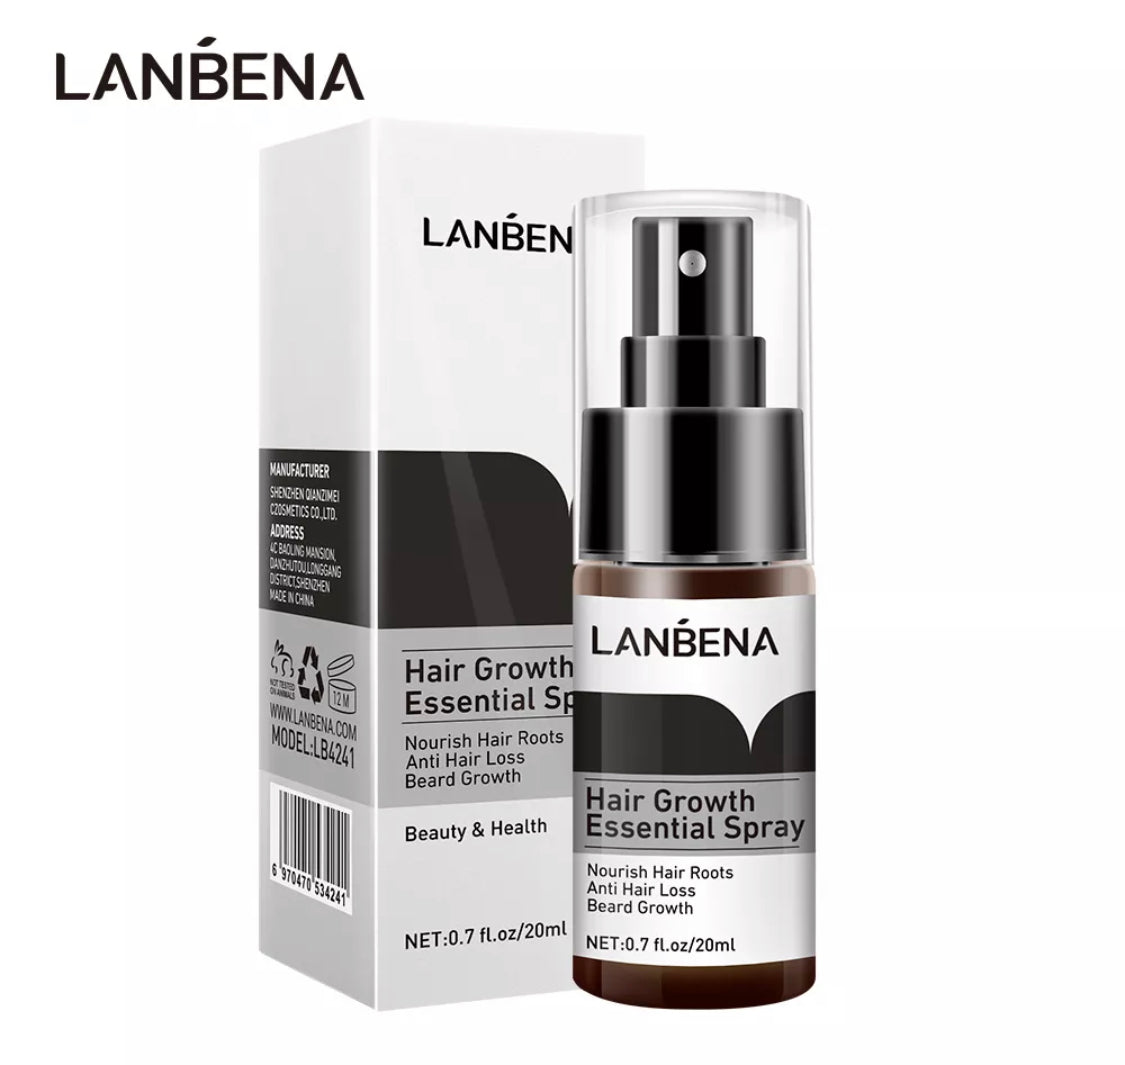 Lanbena Hair Essentials Spray and Oil Set